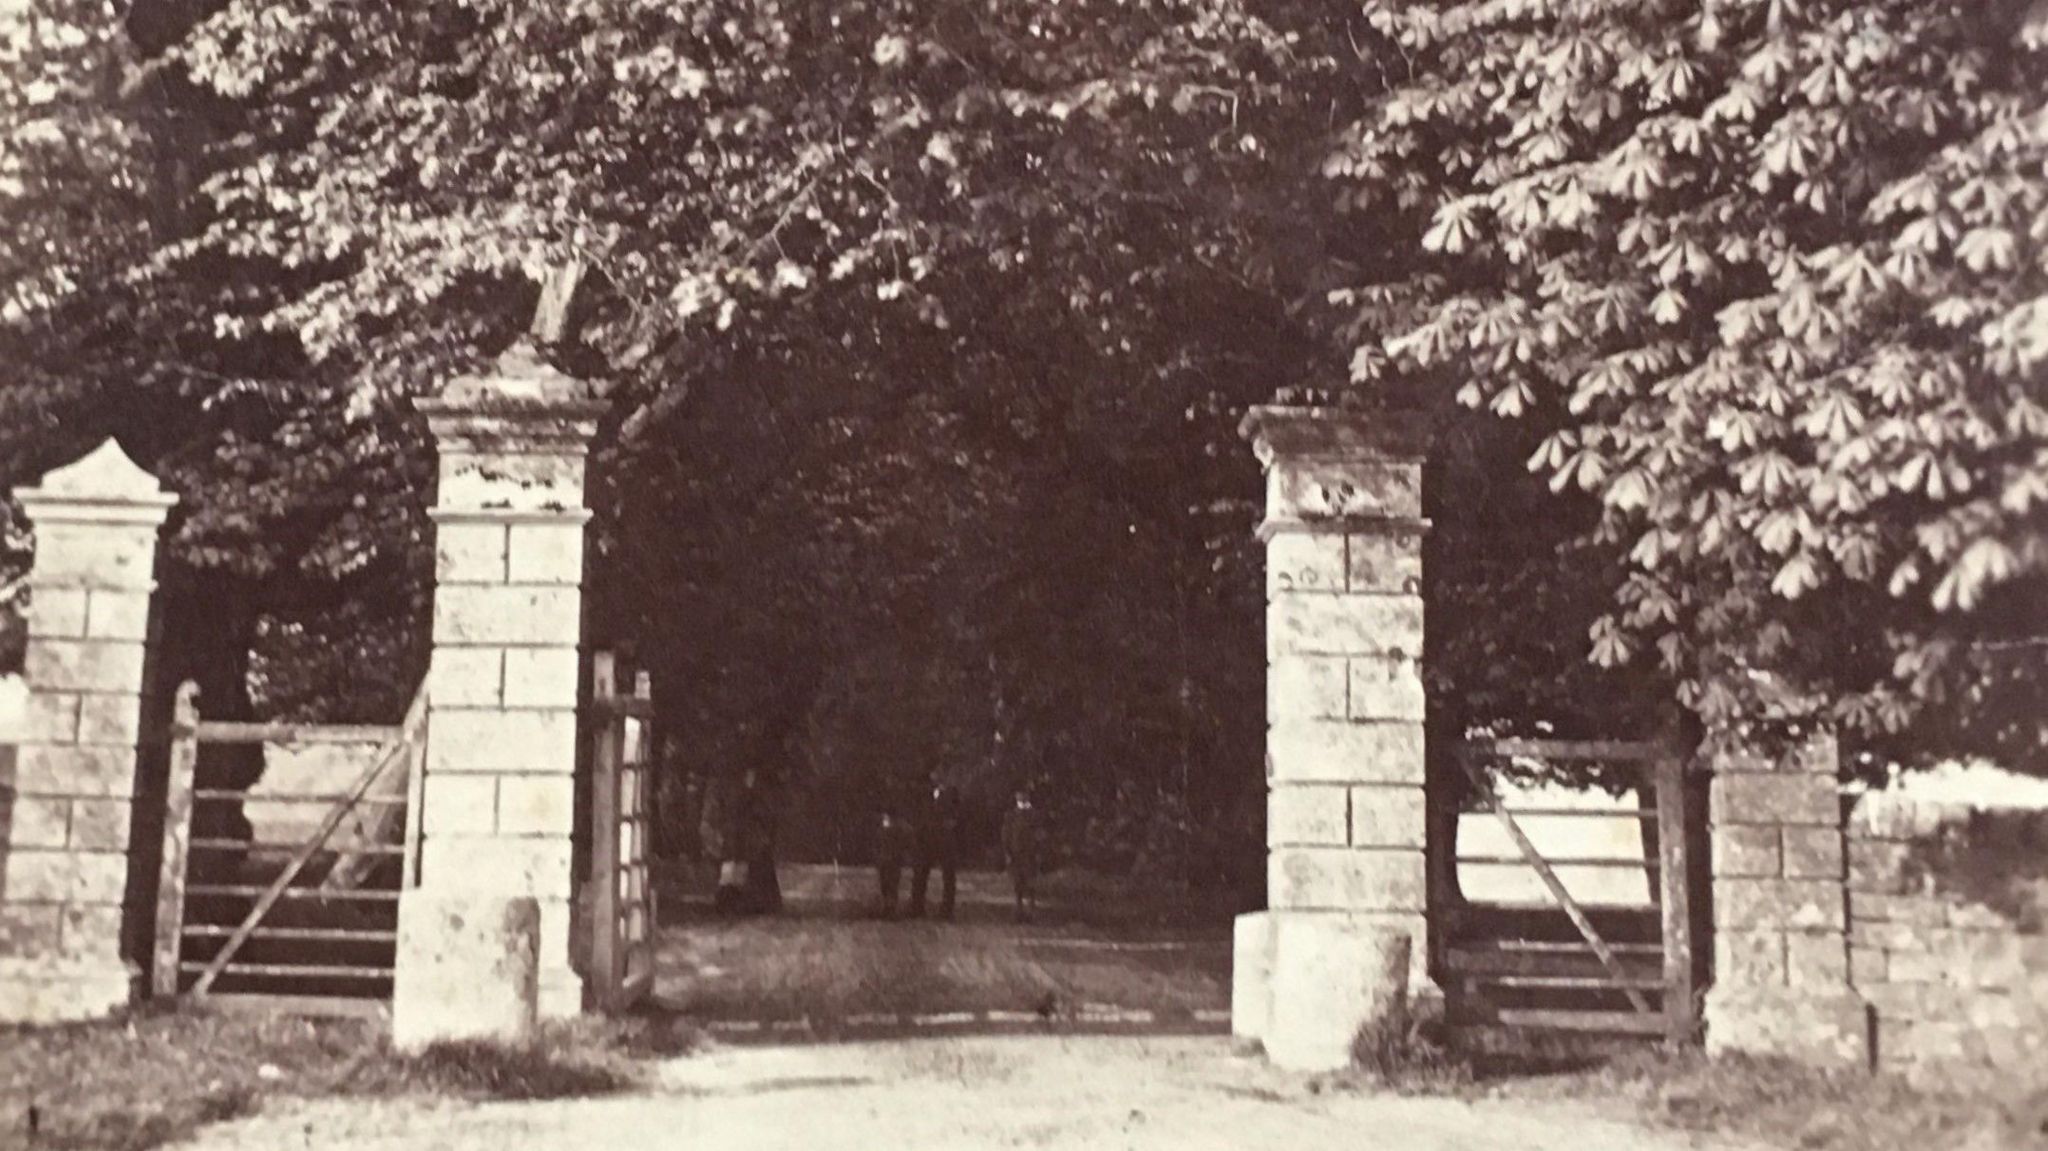 A grainy, black and white photograph of the Tissington village gates